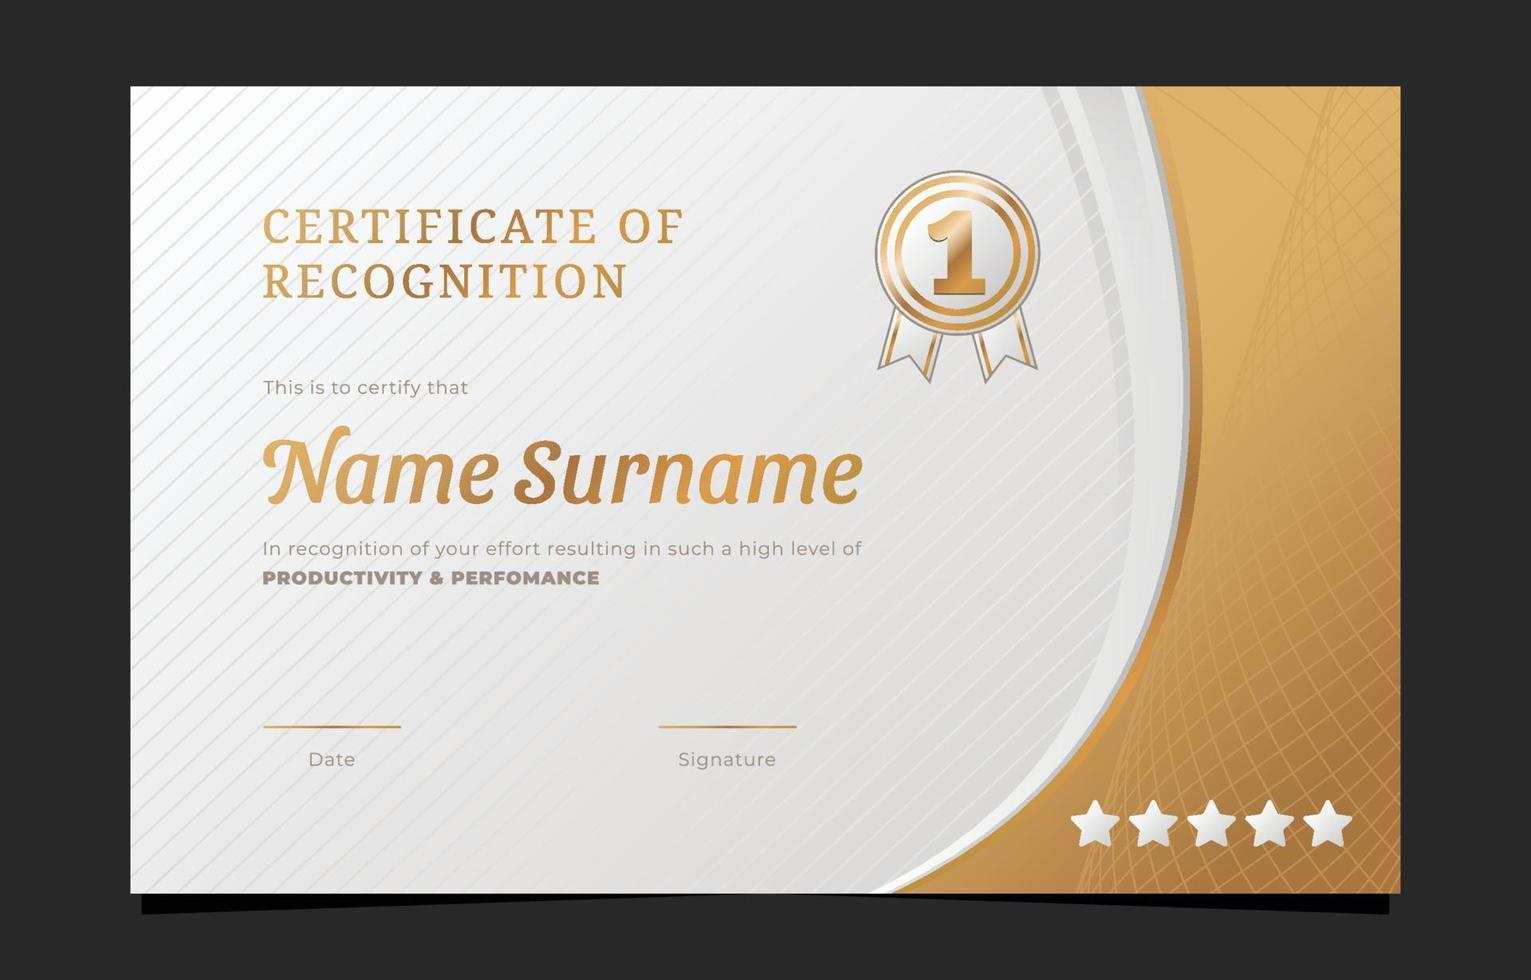 Promotion Career Certificate Template vector